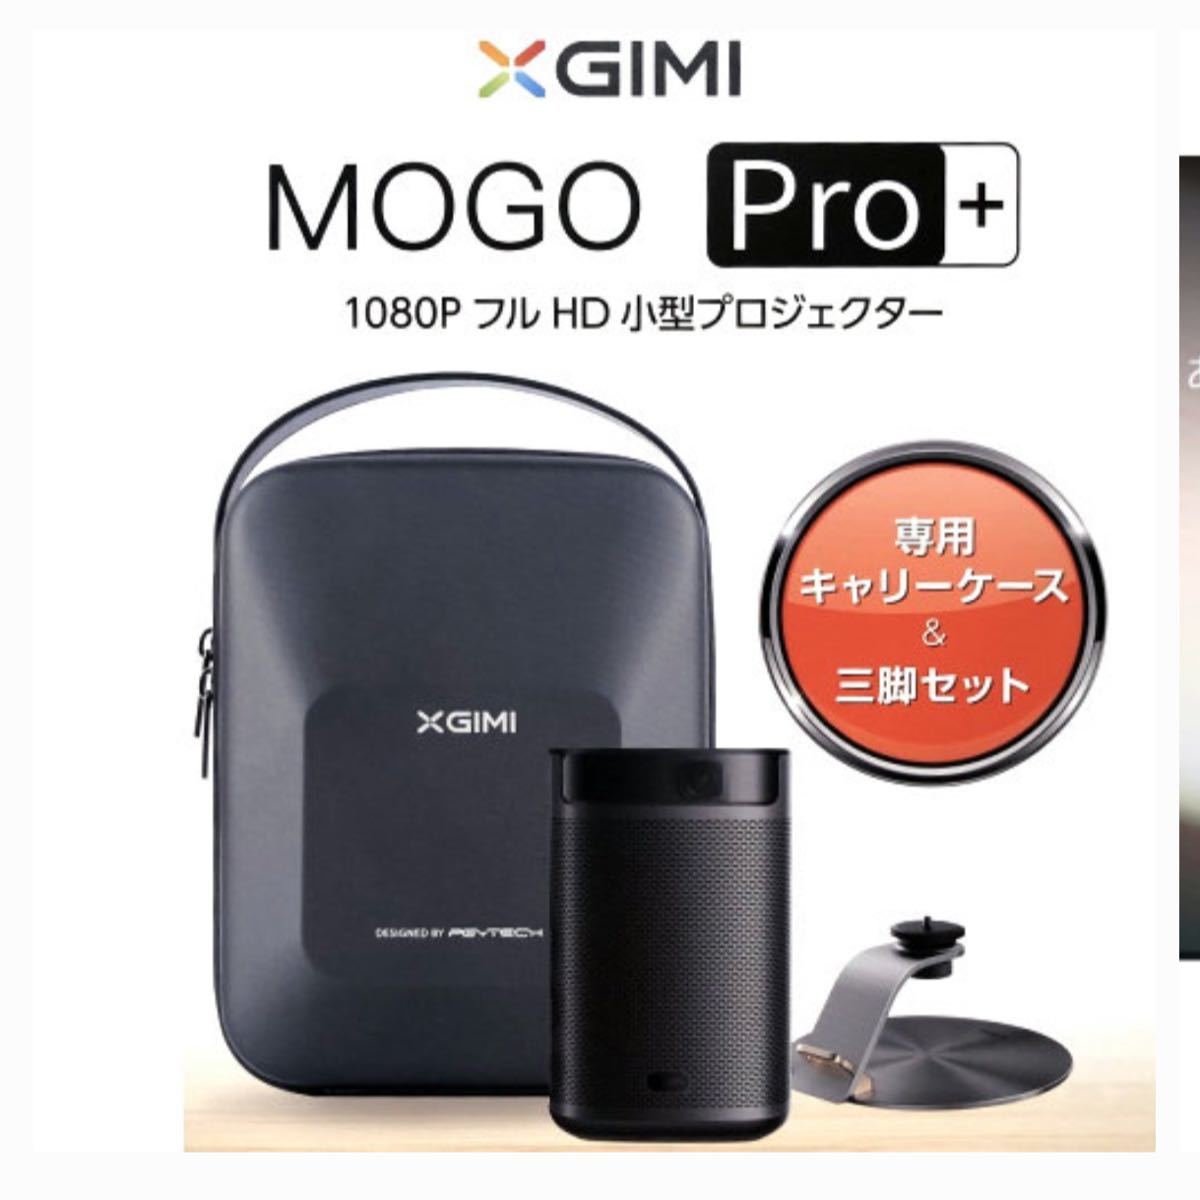 xgimi mogo pro+ 3点セット 最安値 完全未開封｜PayPayフリマ